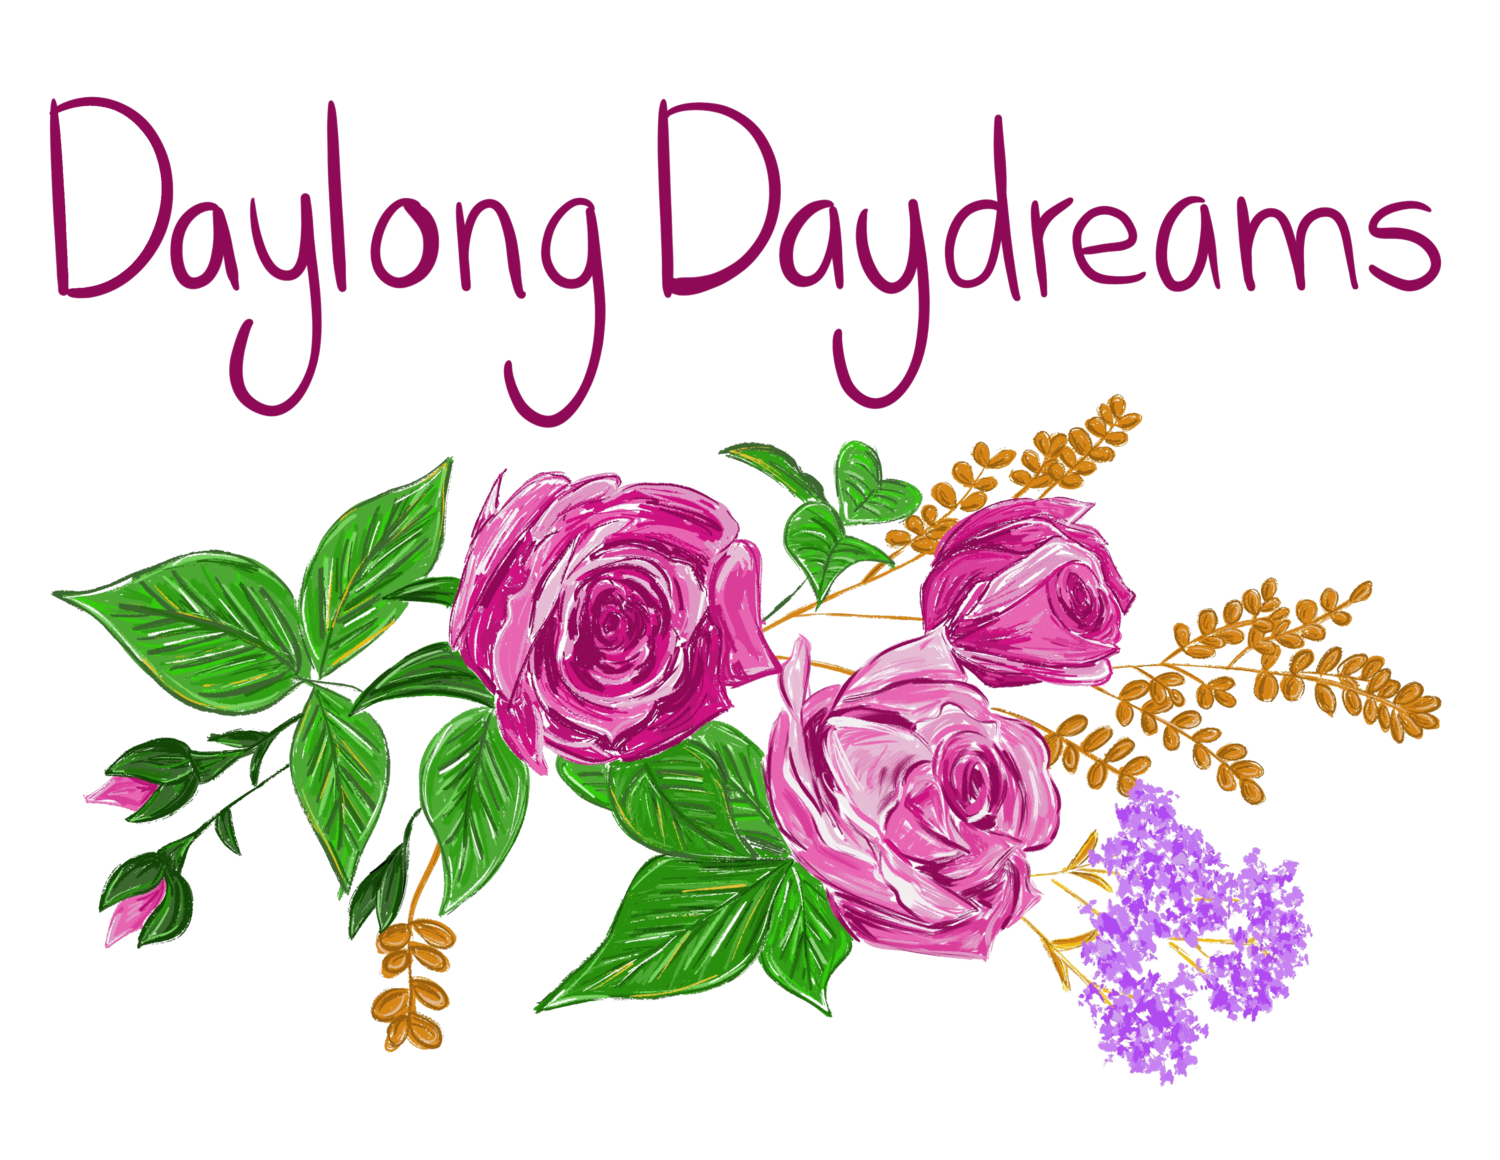 Daylong Daydreams